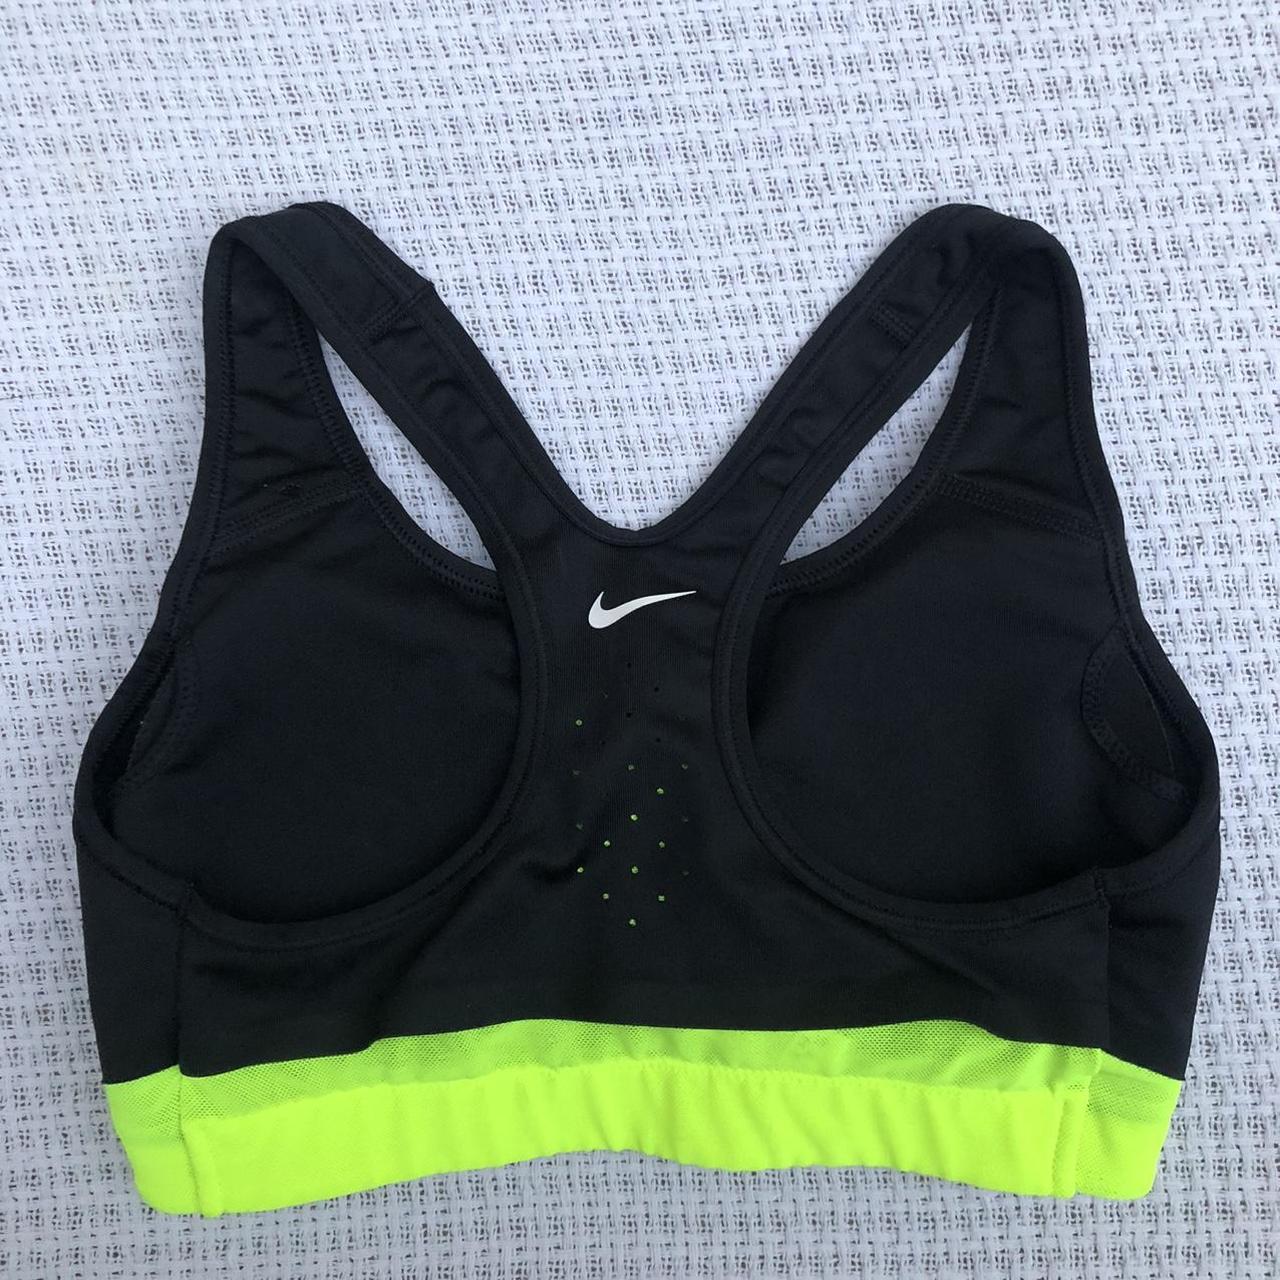 NWOT black and neon green nike sports bra 💚 brand - Depop